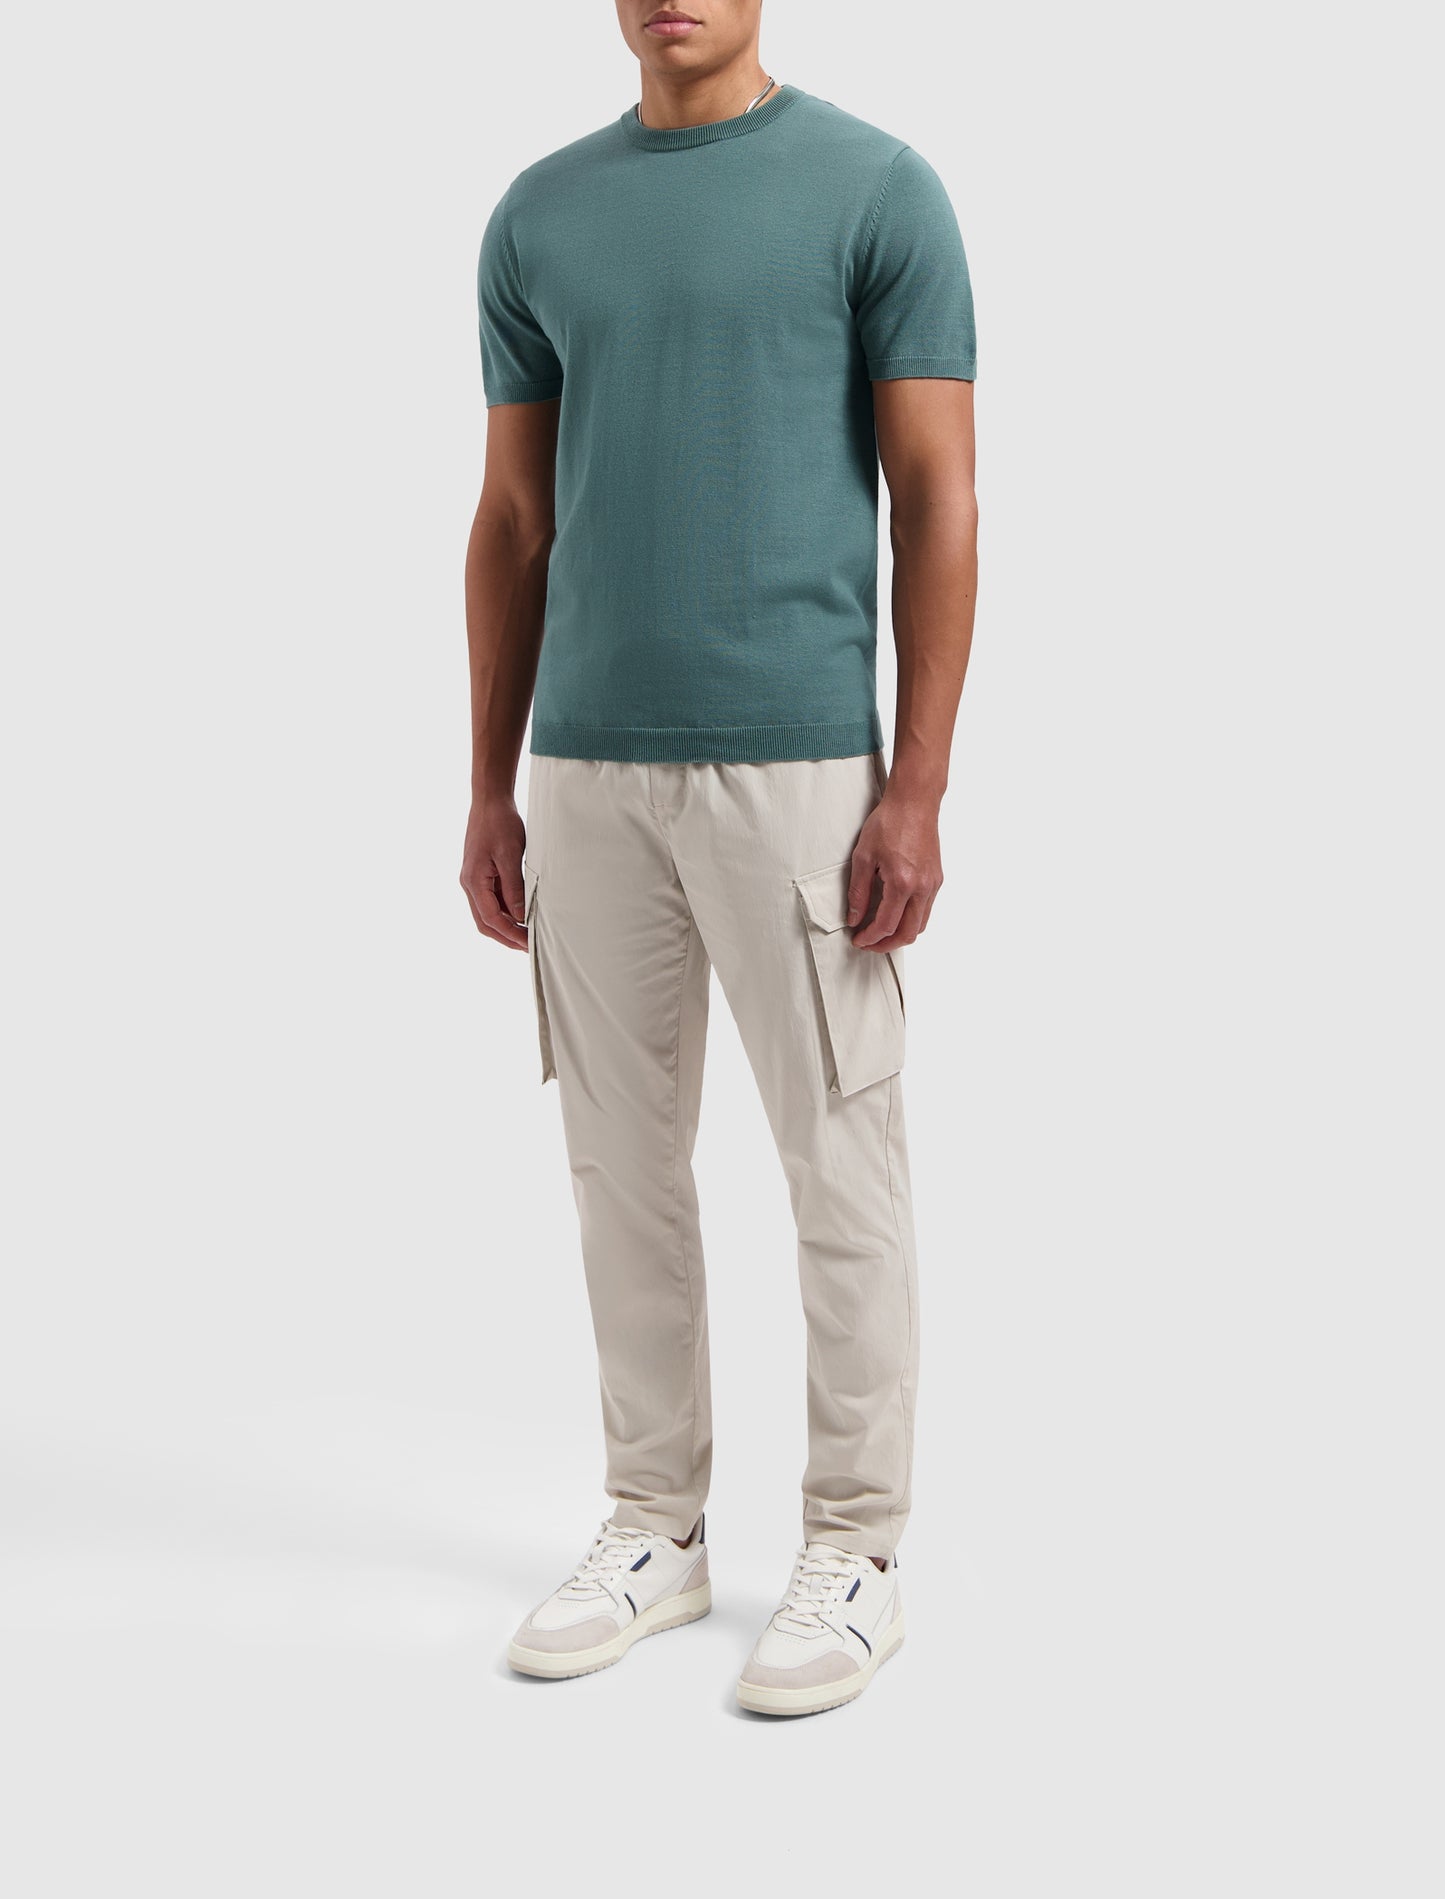 PURE PATH | Knitwear T-Shirt - Faded Green